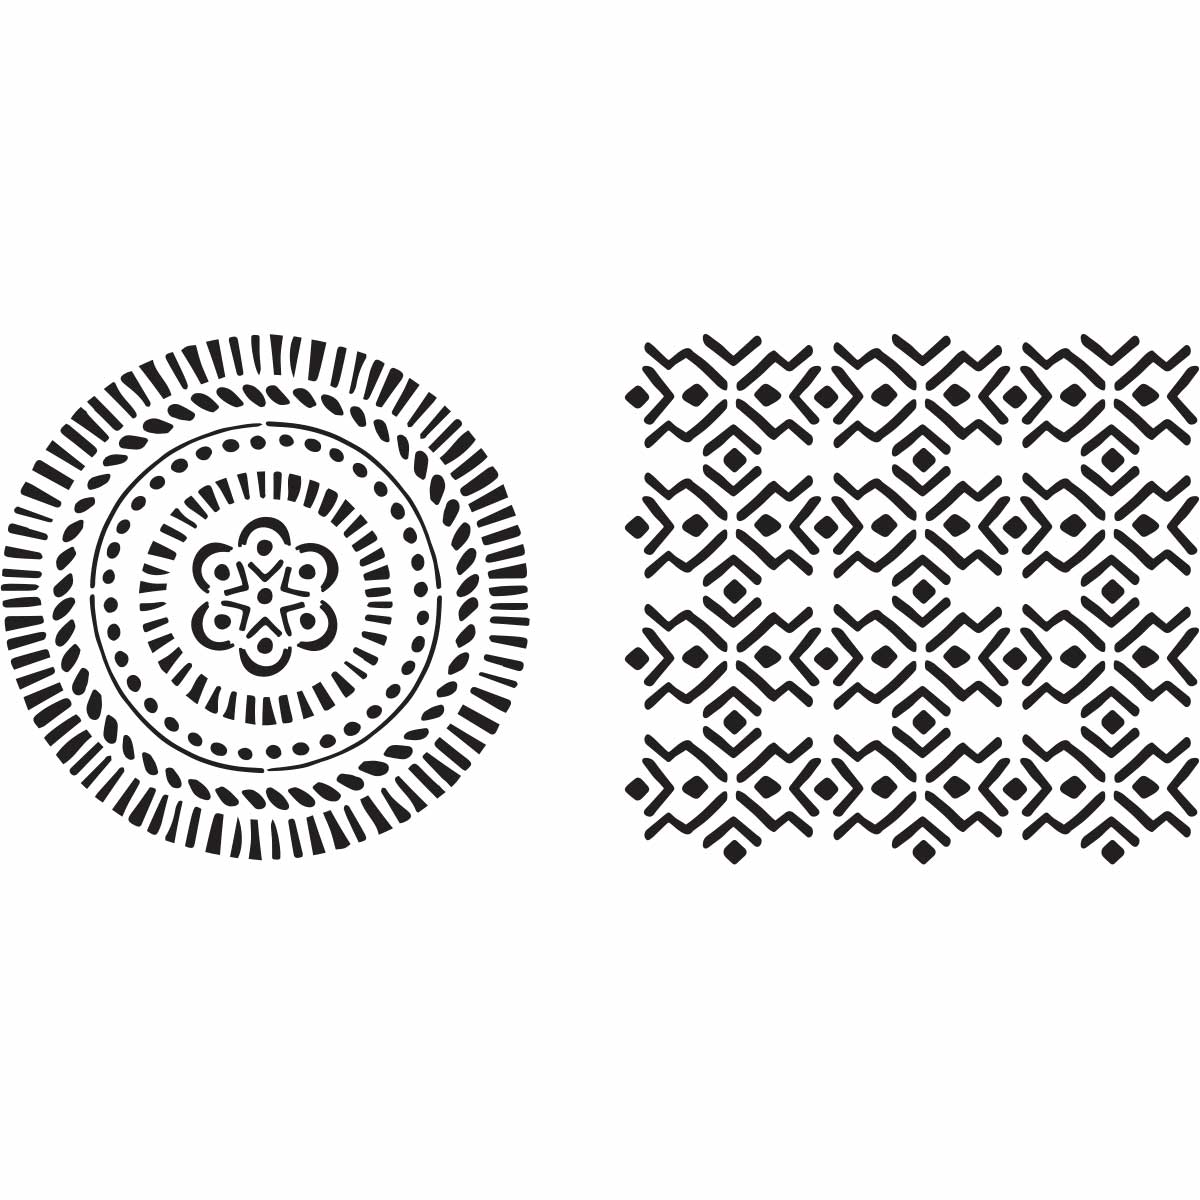 Fabric Creations™ Adhesive Stencils - Tribal, 6